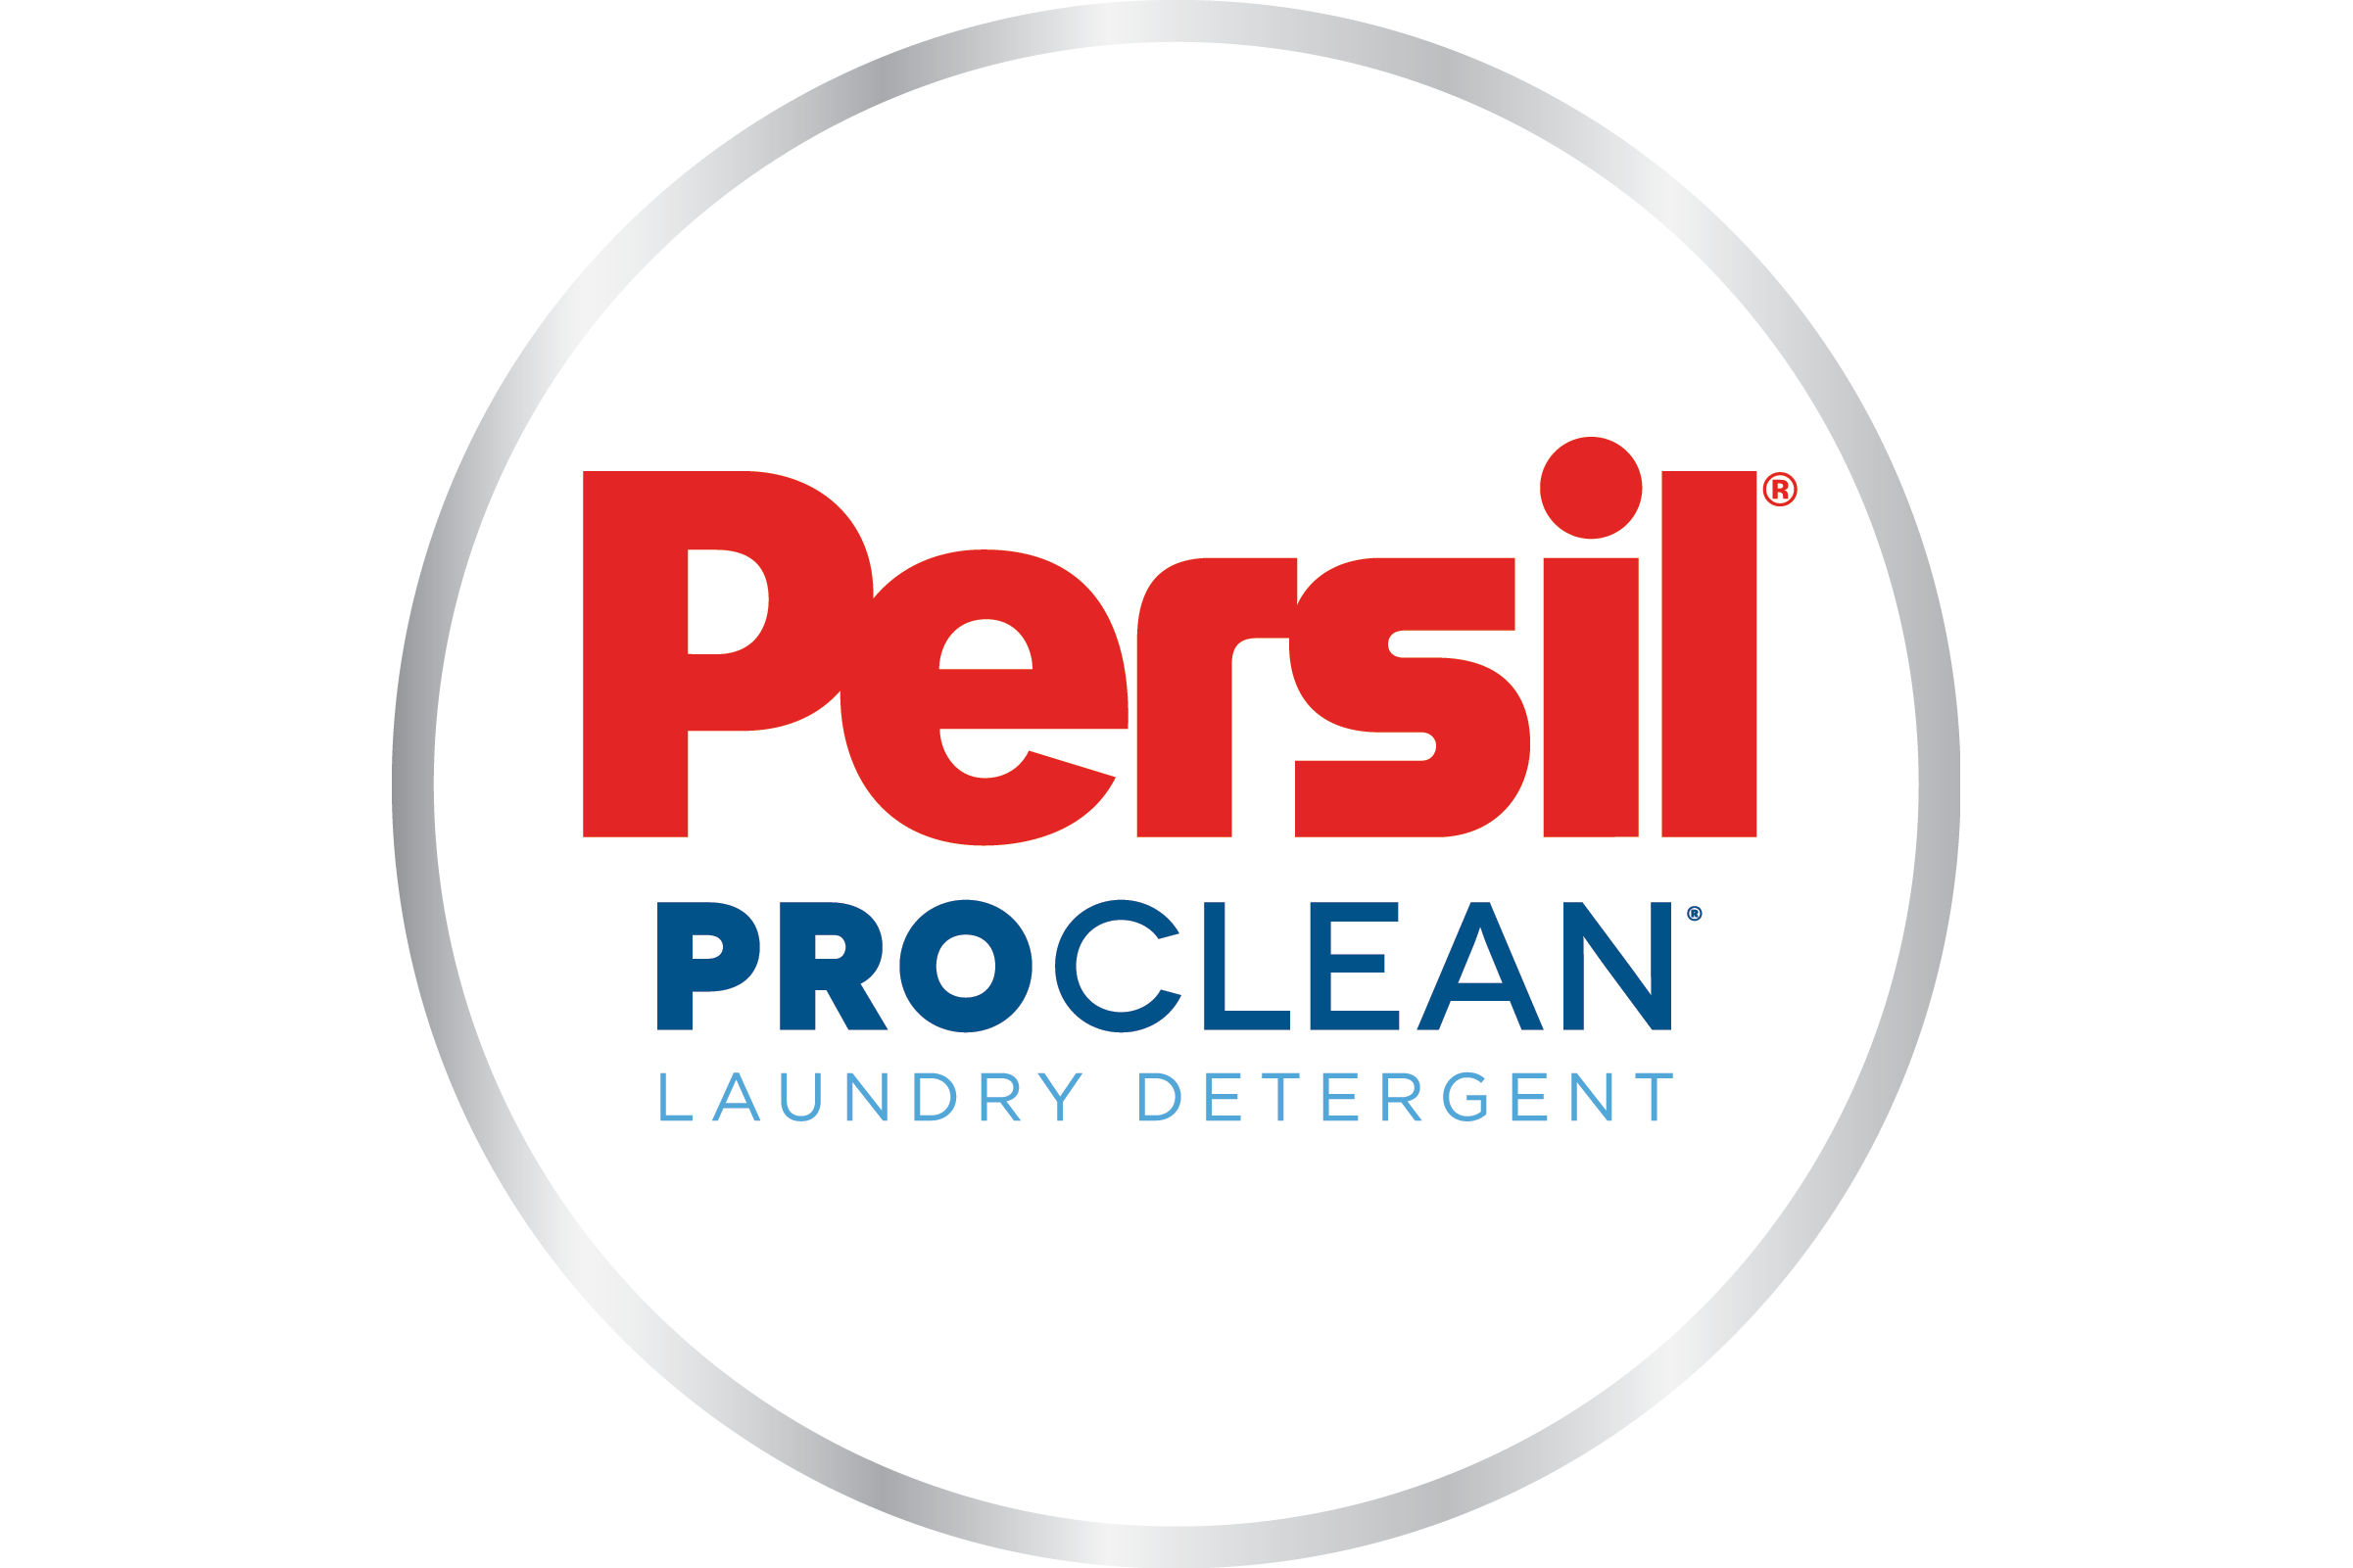 Premium laundry detergent brand Persil ProClean returns for TV during Super Bowl LIII®